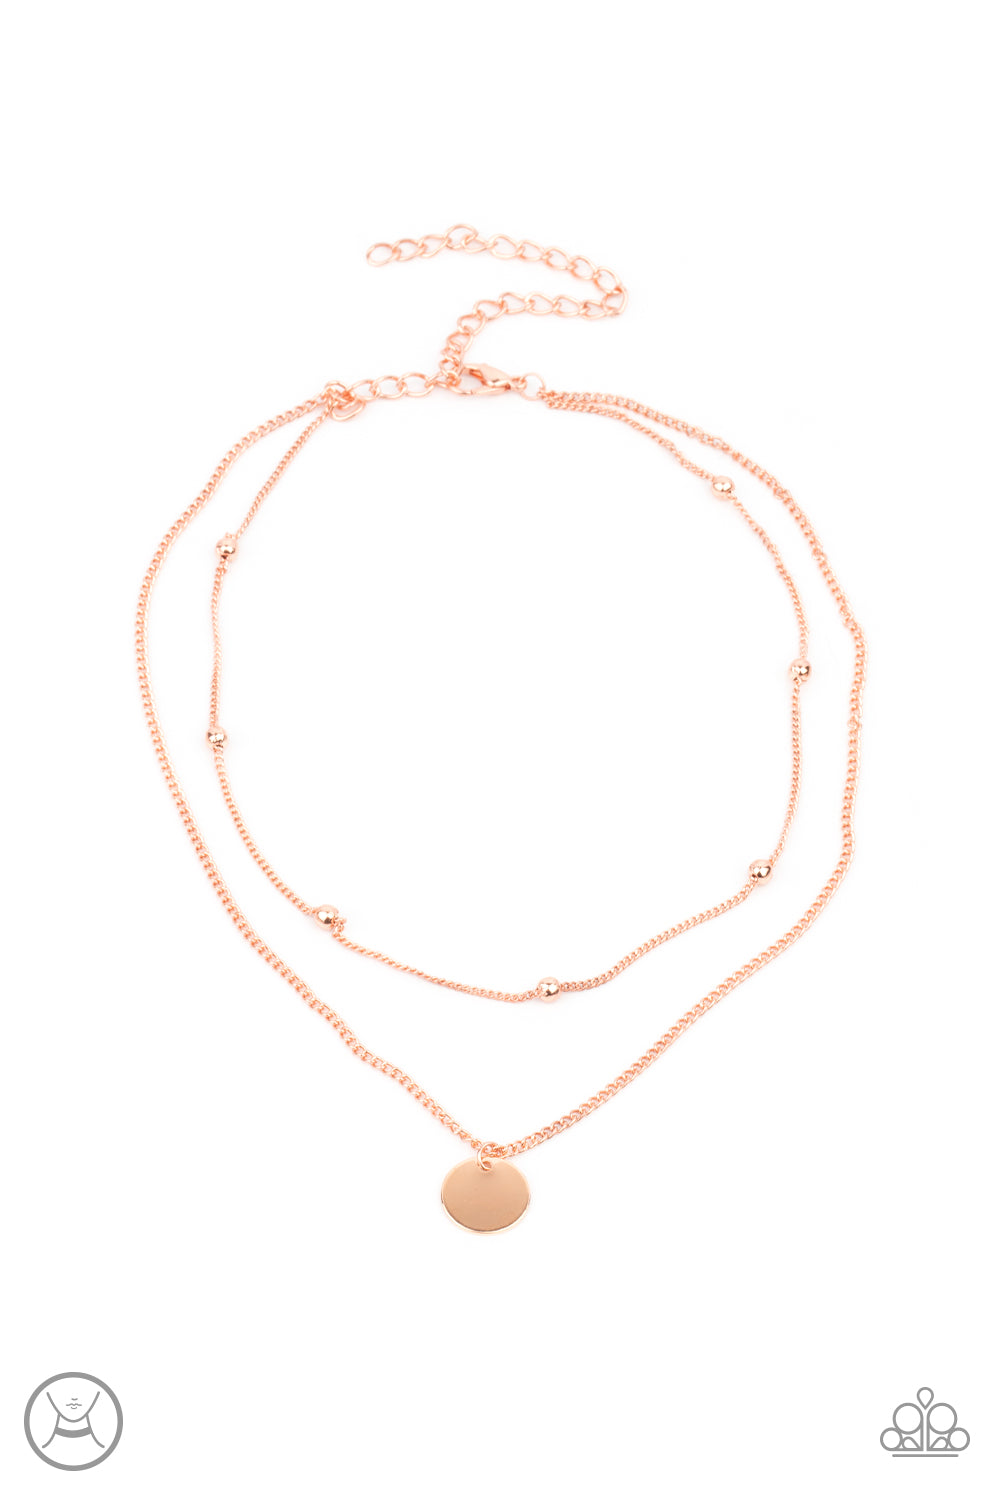 Modestly Minimalist - Copper Choker Necklace - Paparazzi Accessories